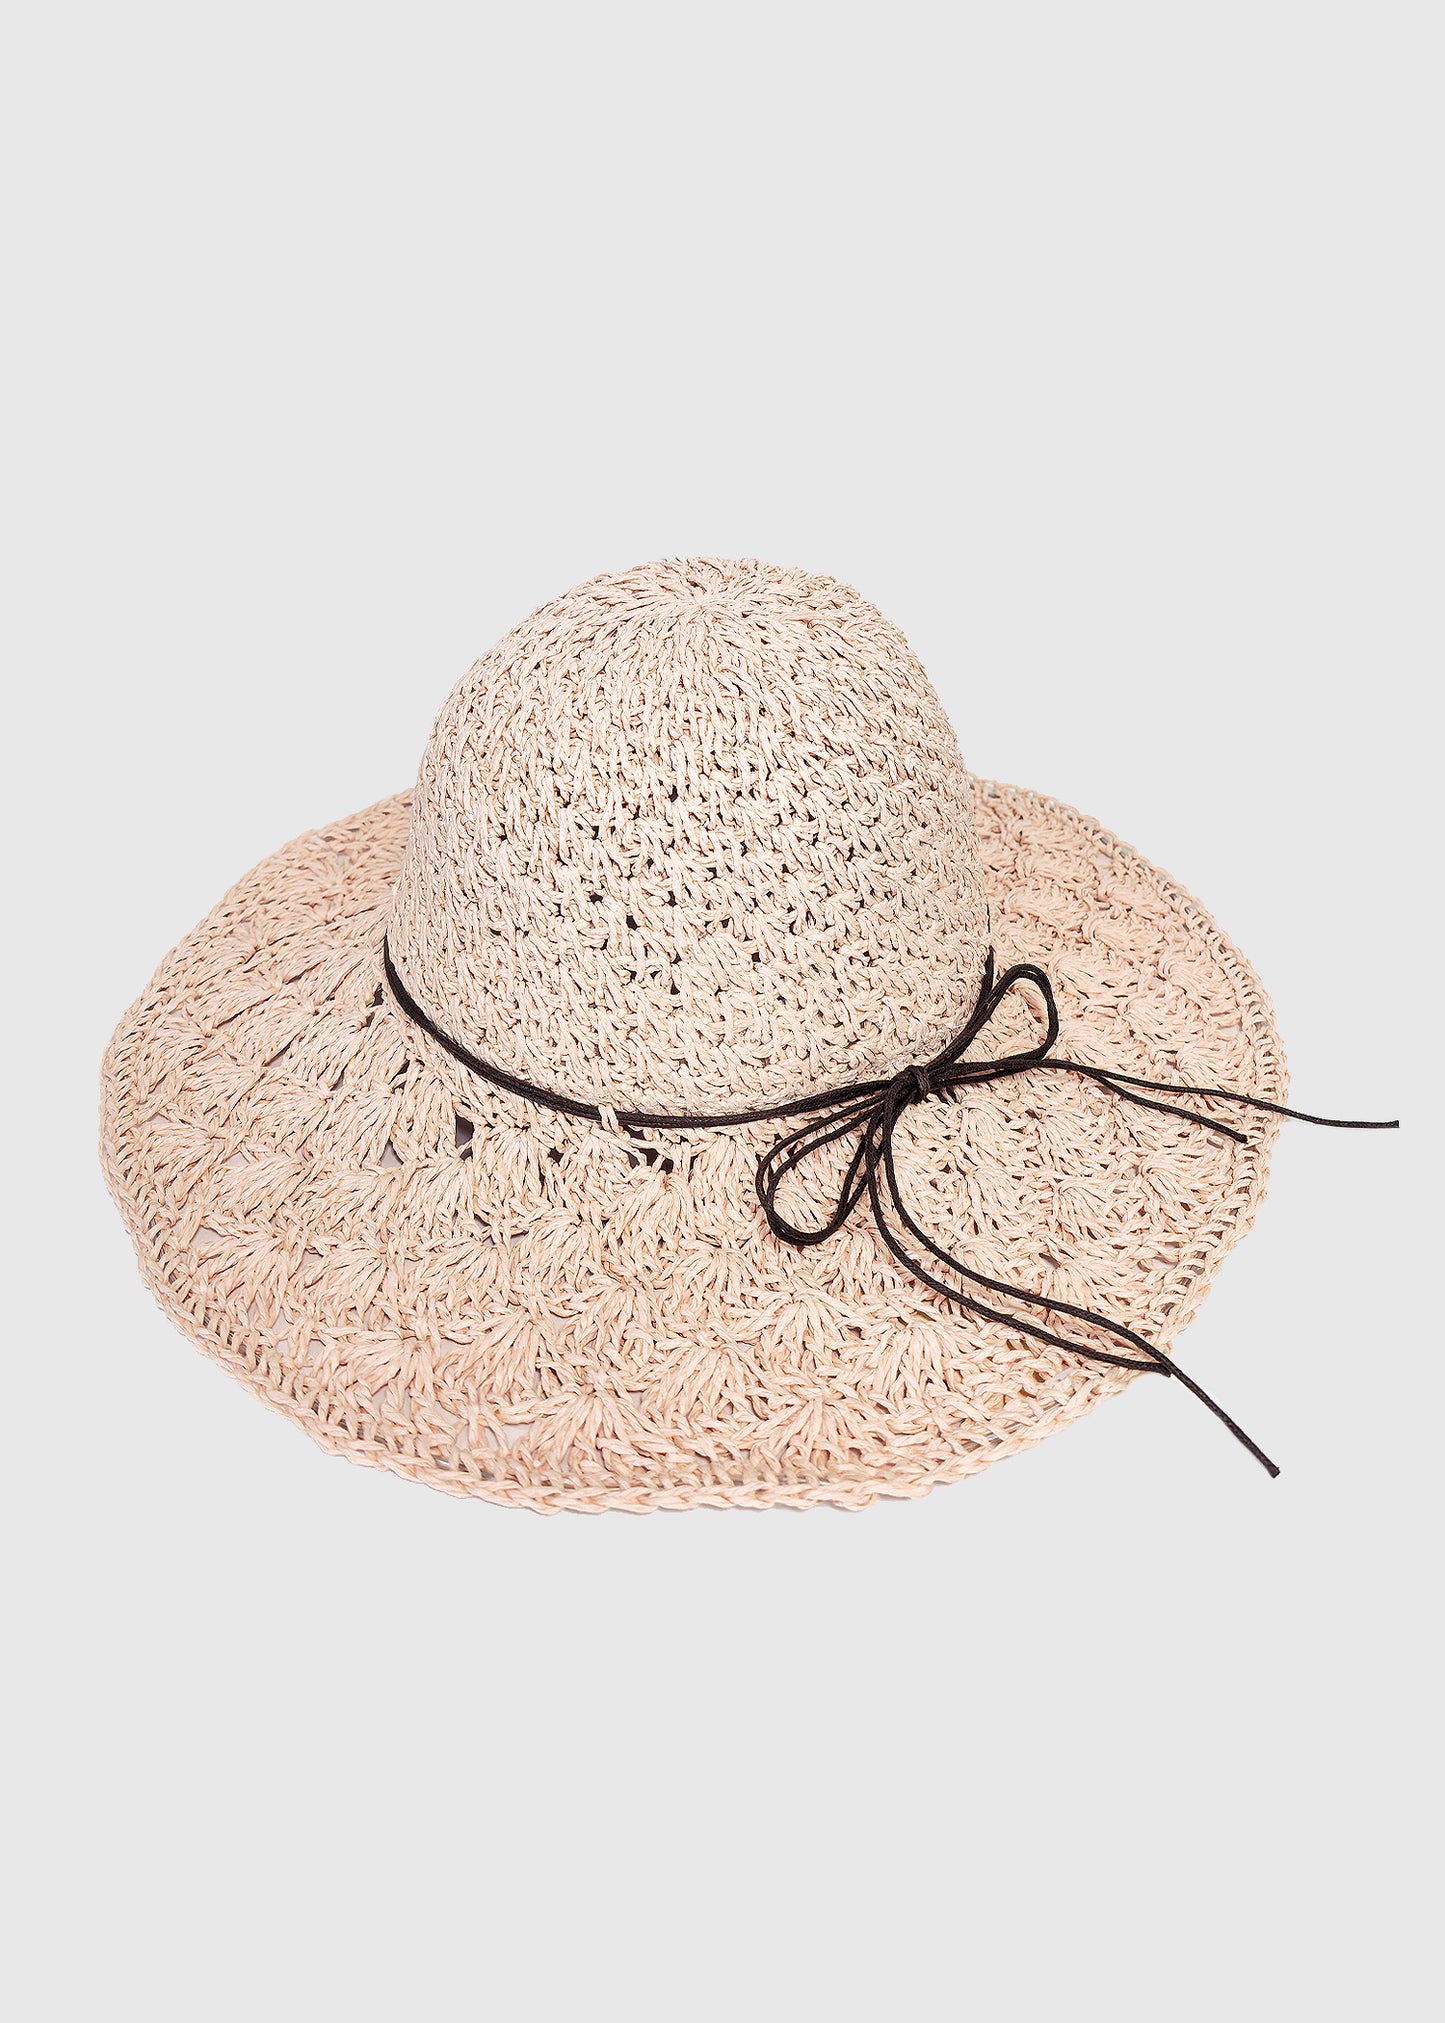 Wired Crochet Straw Hat